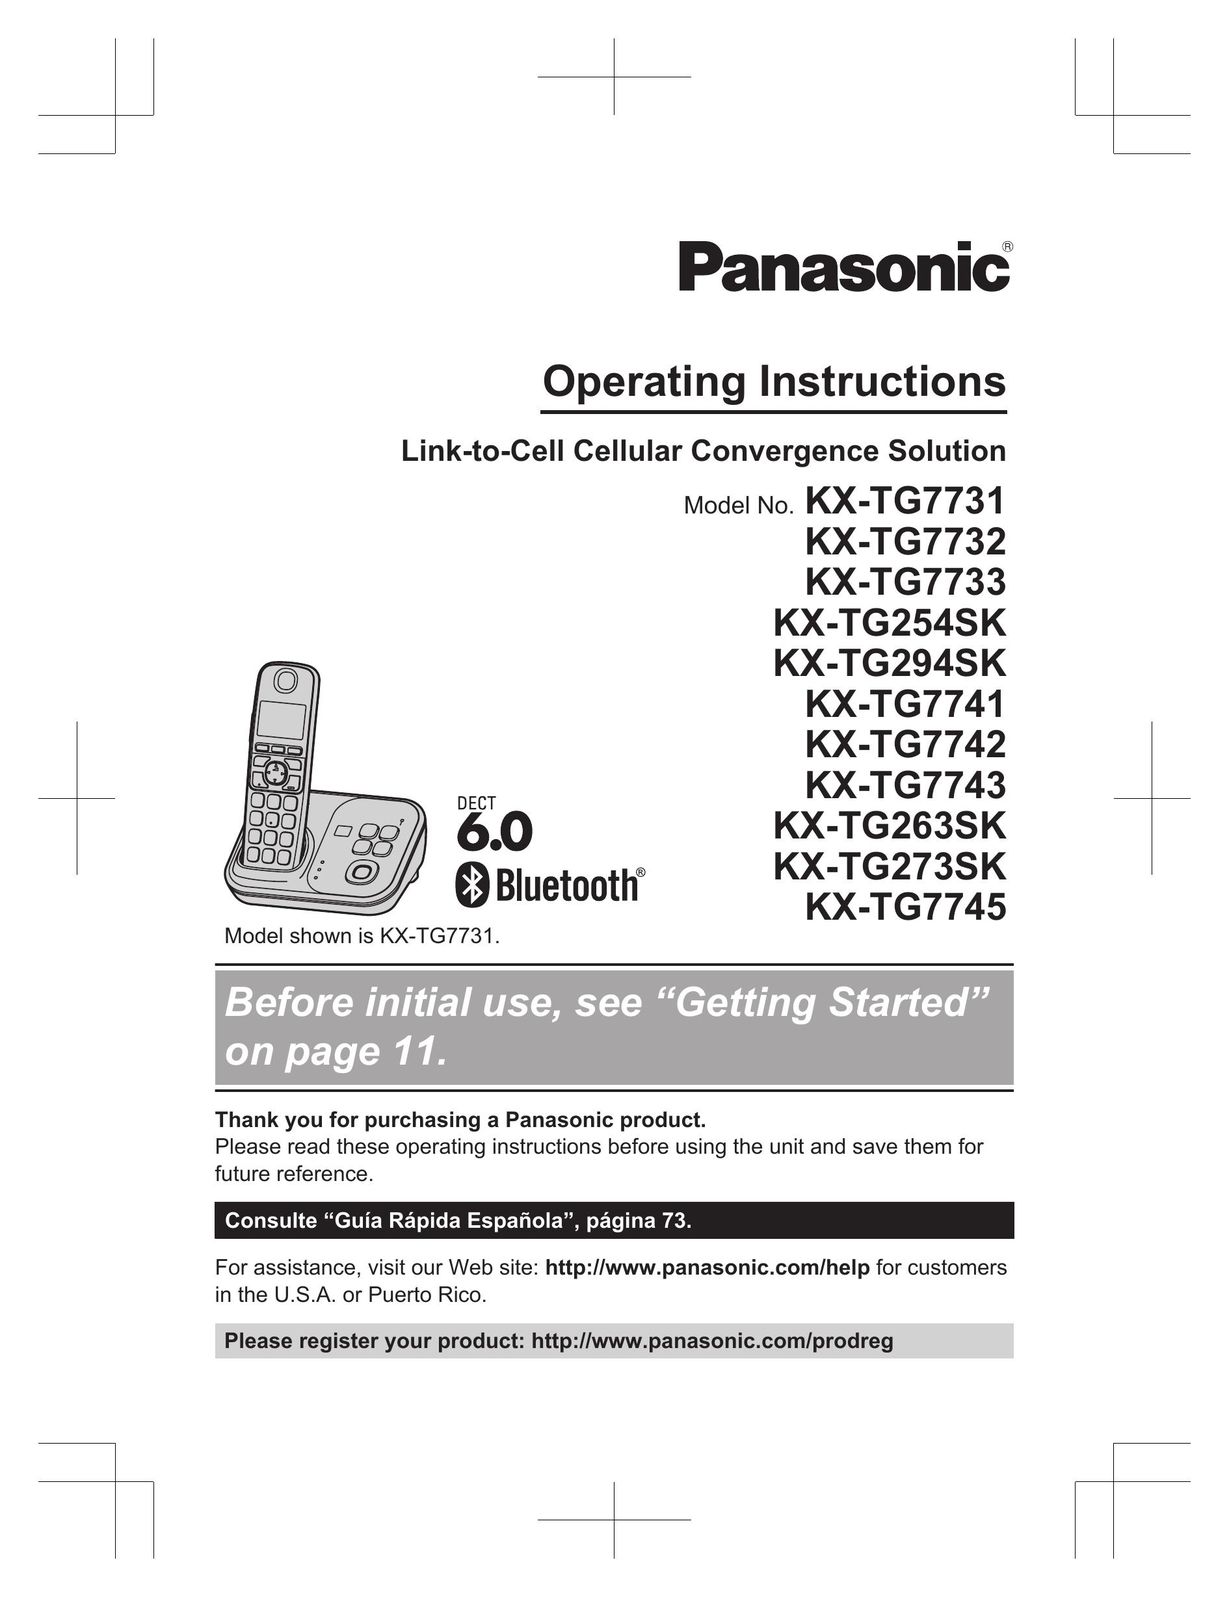 Panasonic KX-TG254SK Carrying Case User Manual